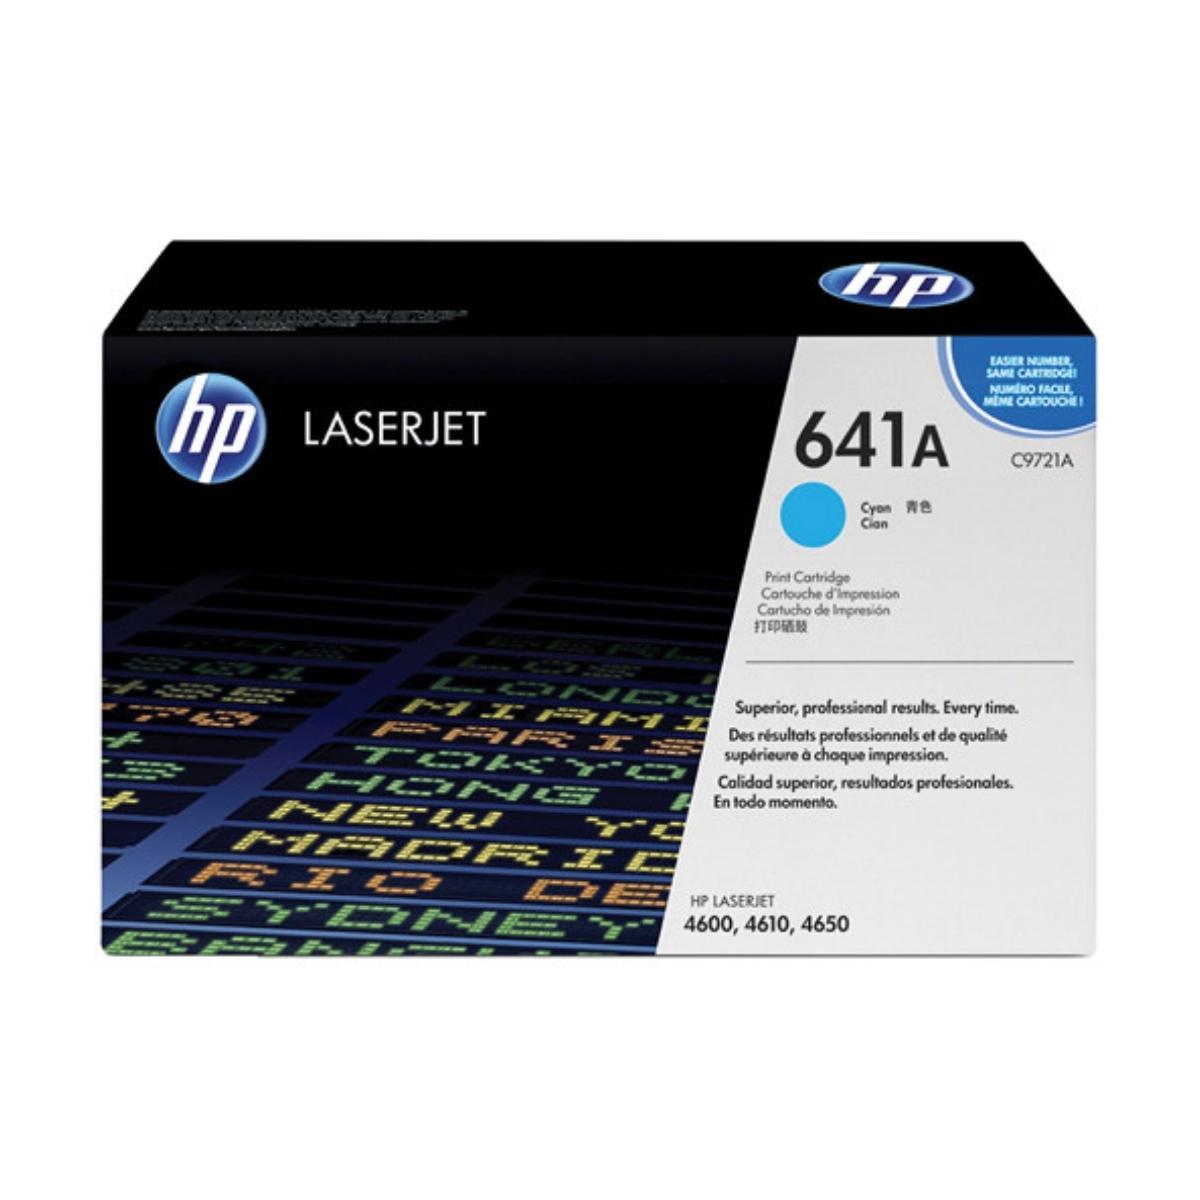 

HP C9721A Cyan Cartridge for Color LaserJet Printers